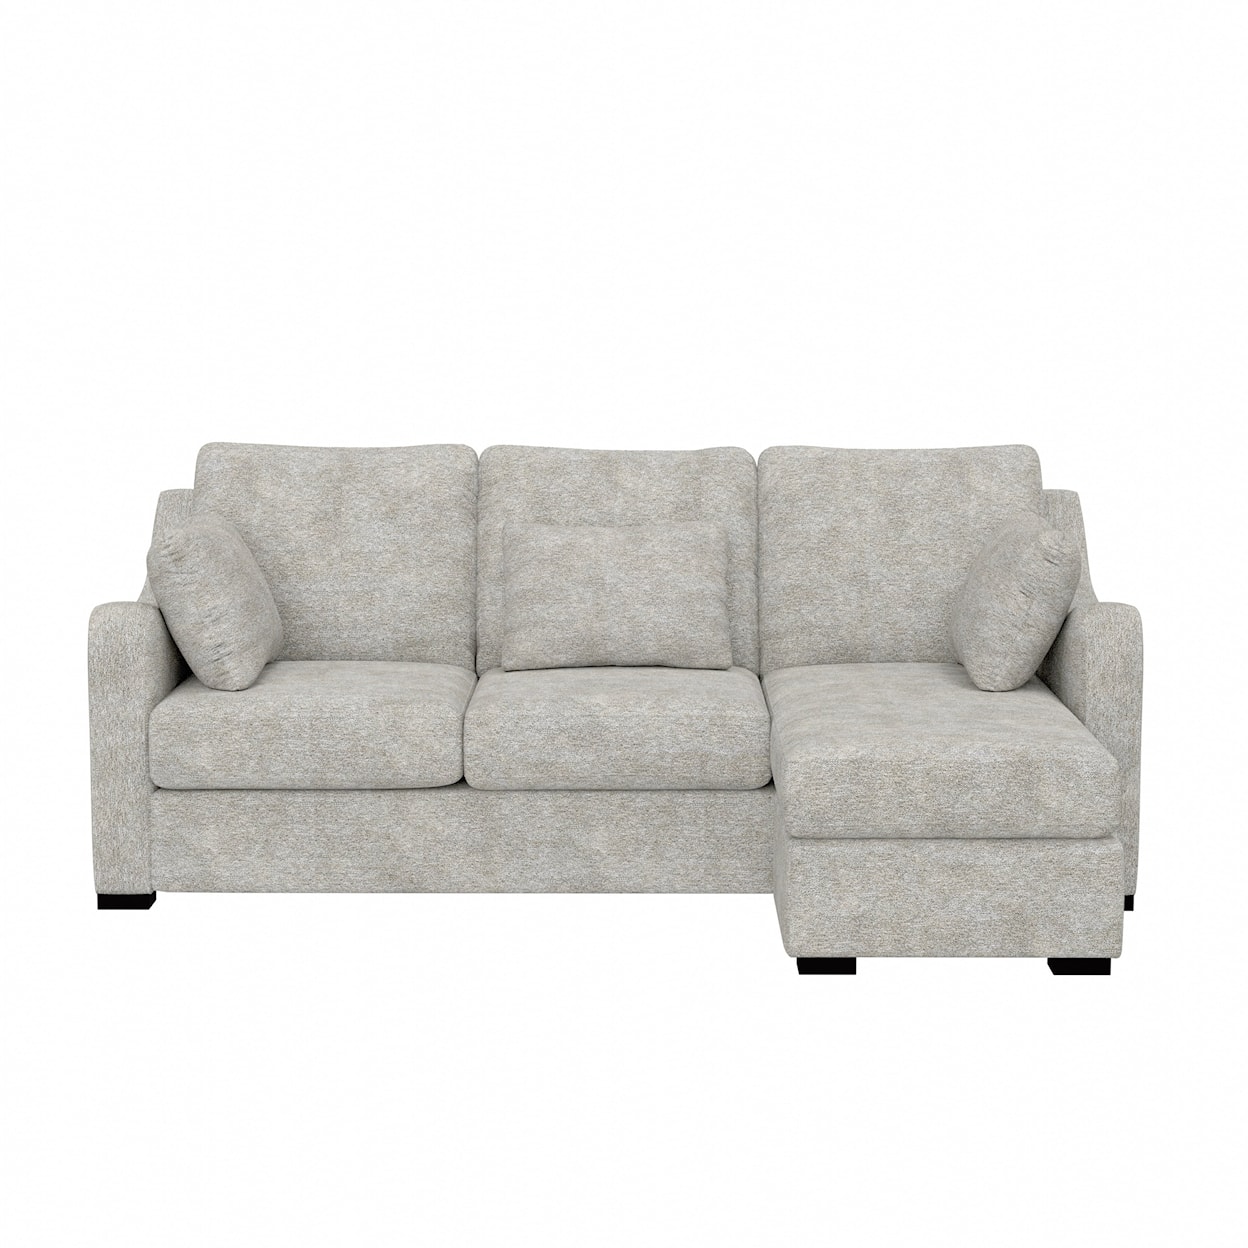 Hillsdale York Sofa